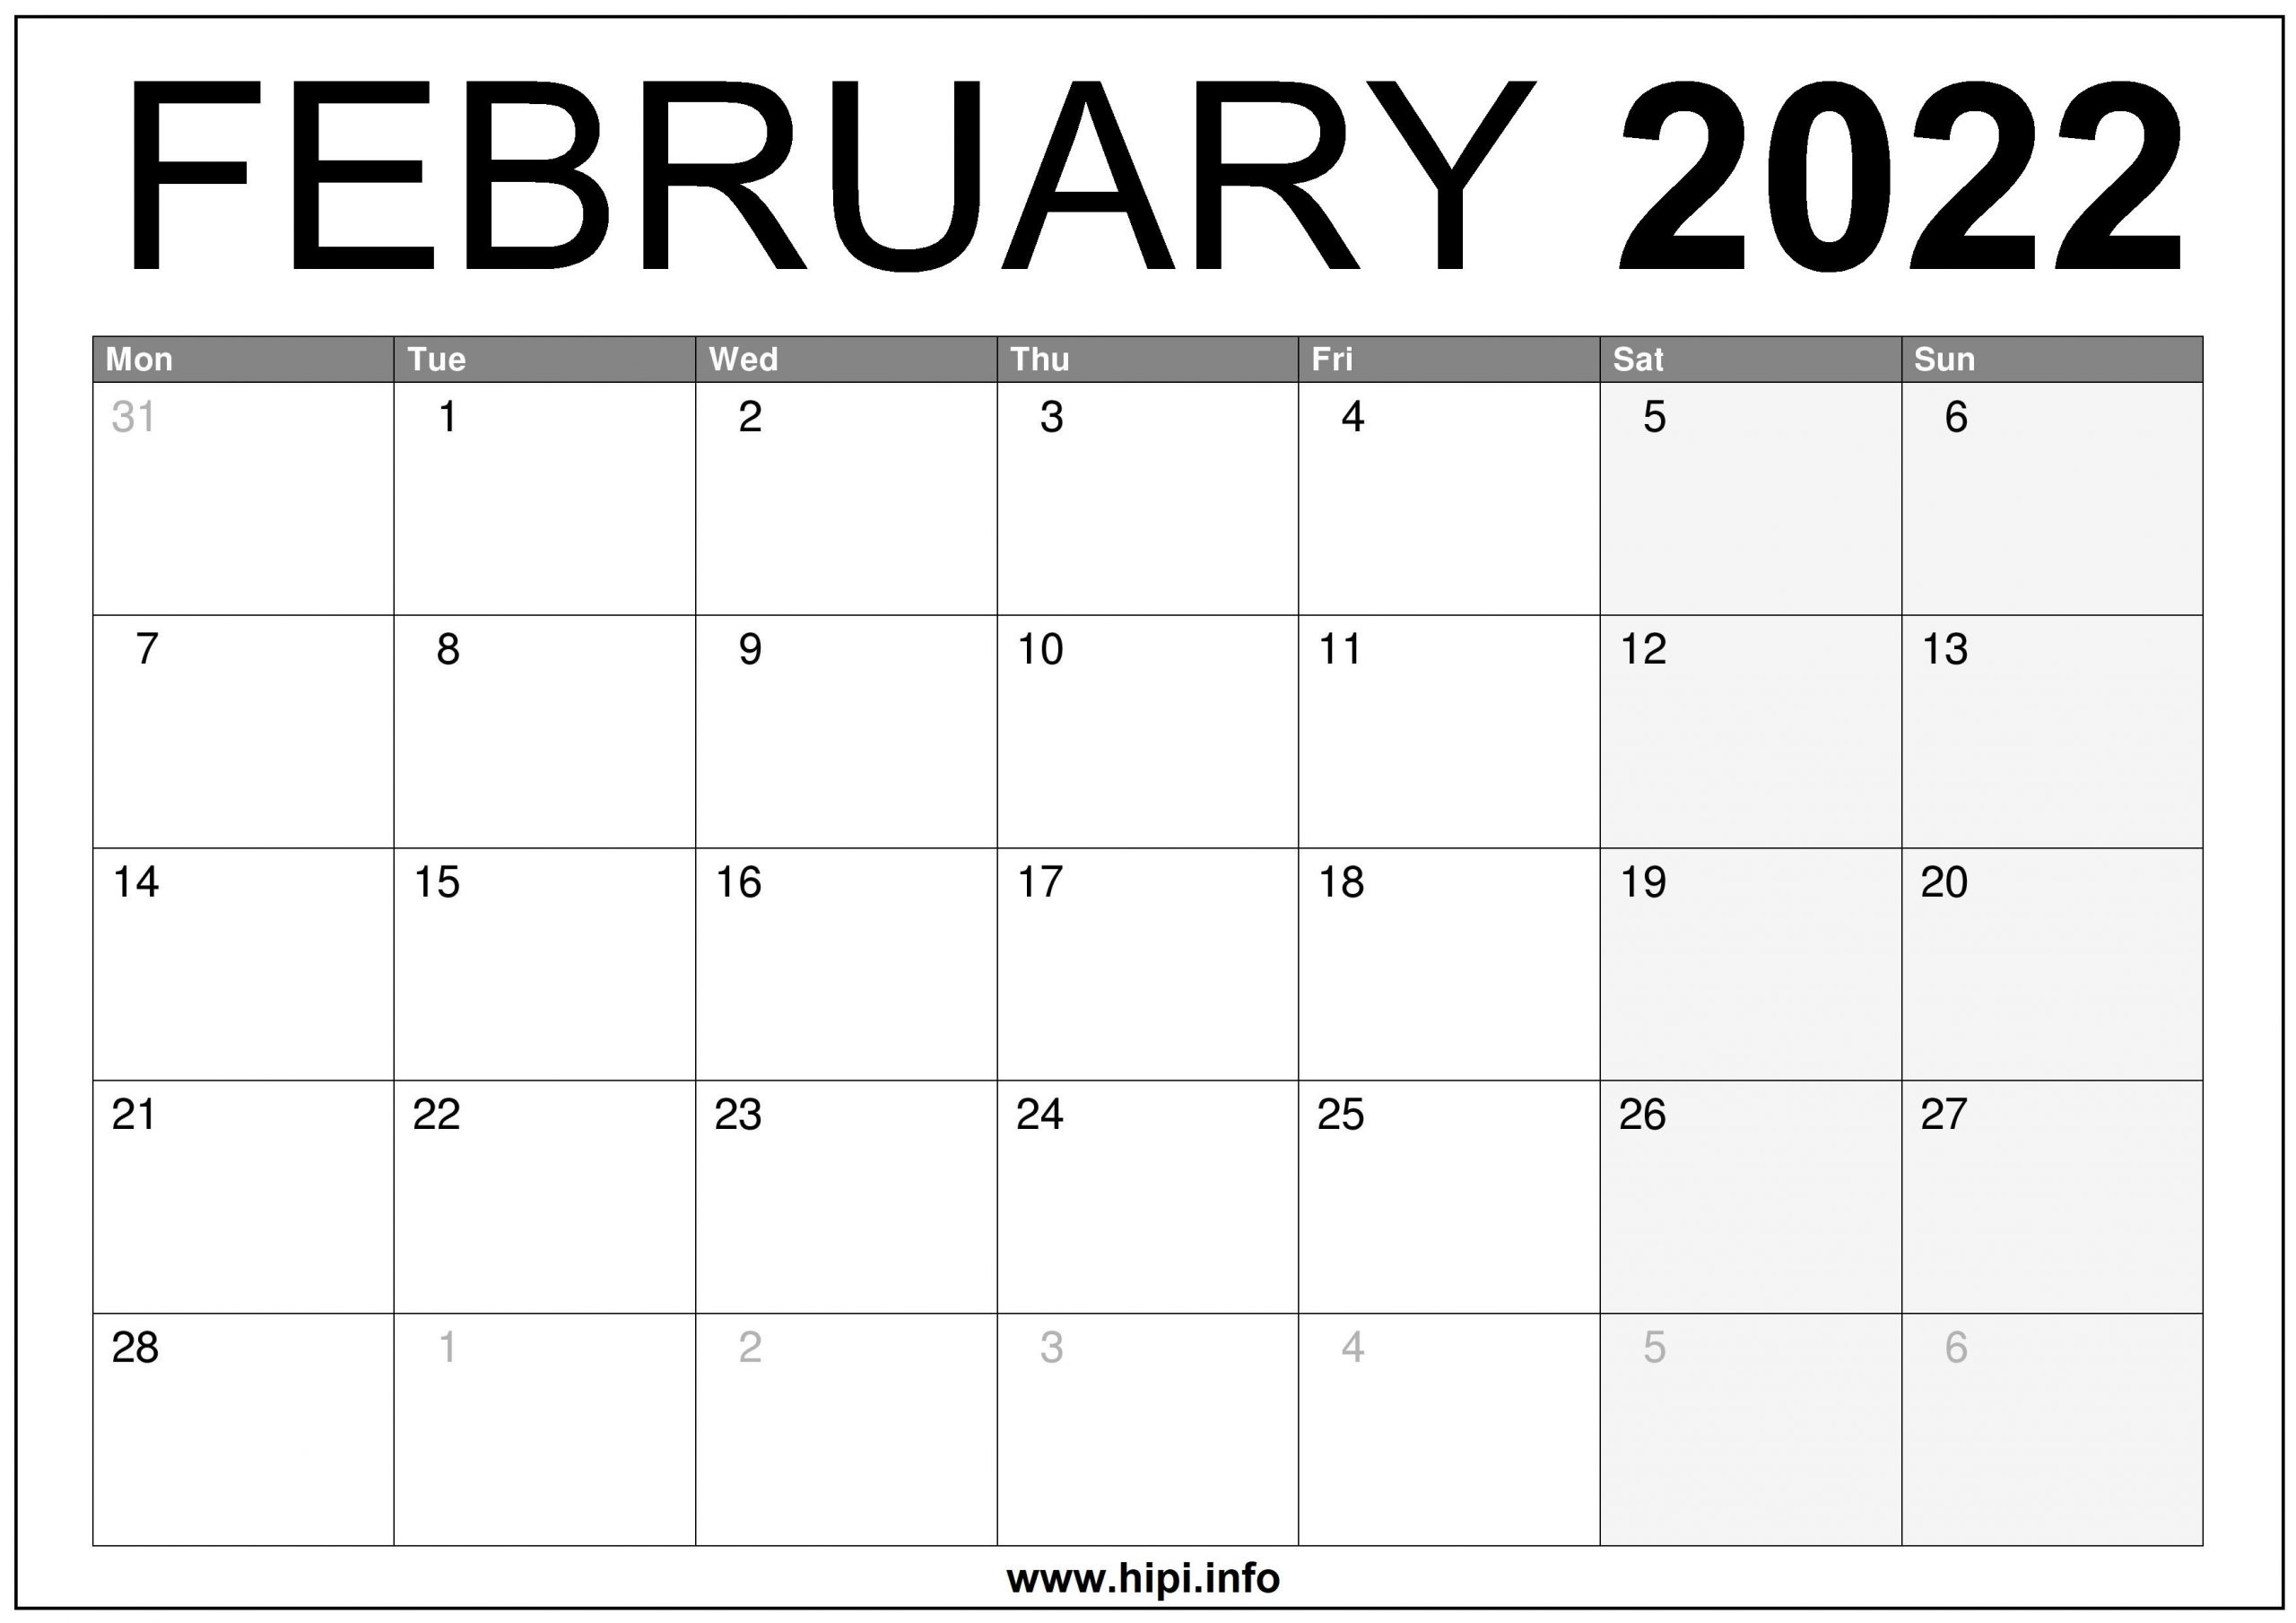 February 2022 Uk Calendar Printable - Free Download - Hipi